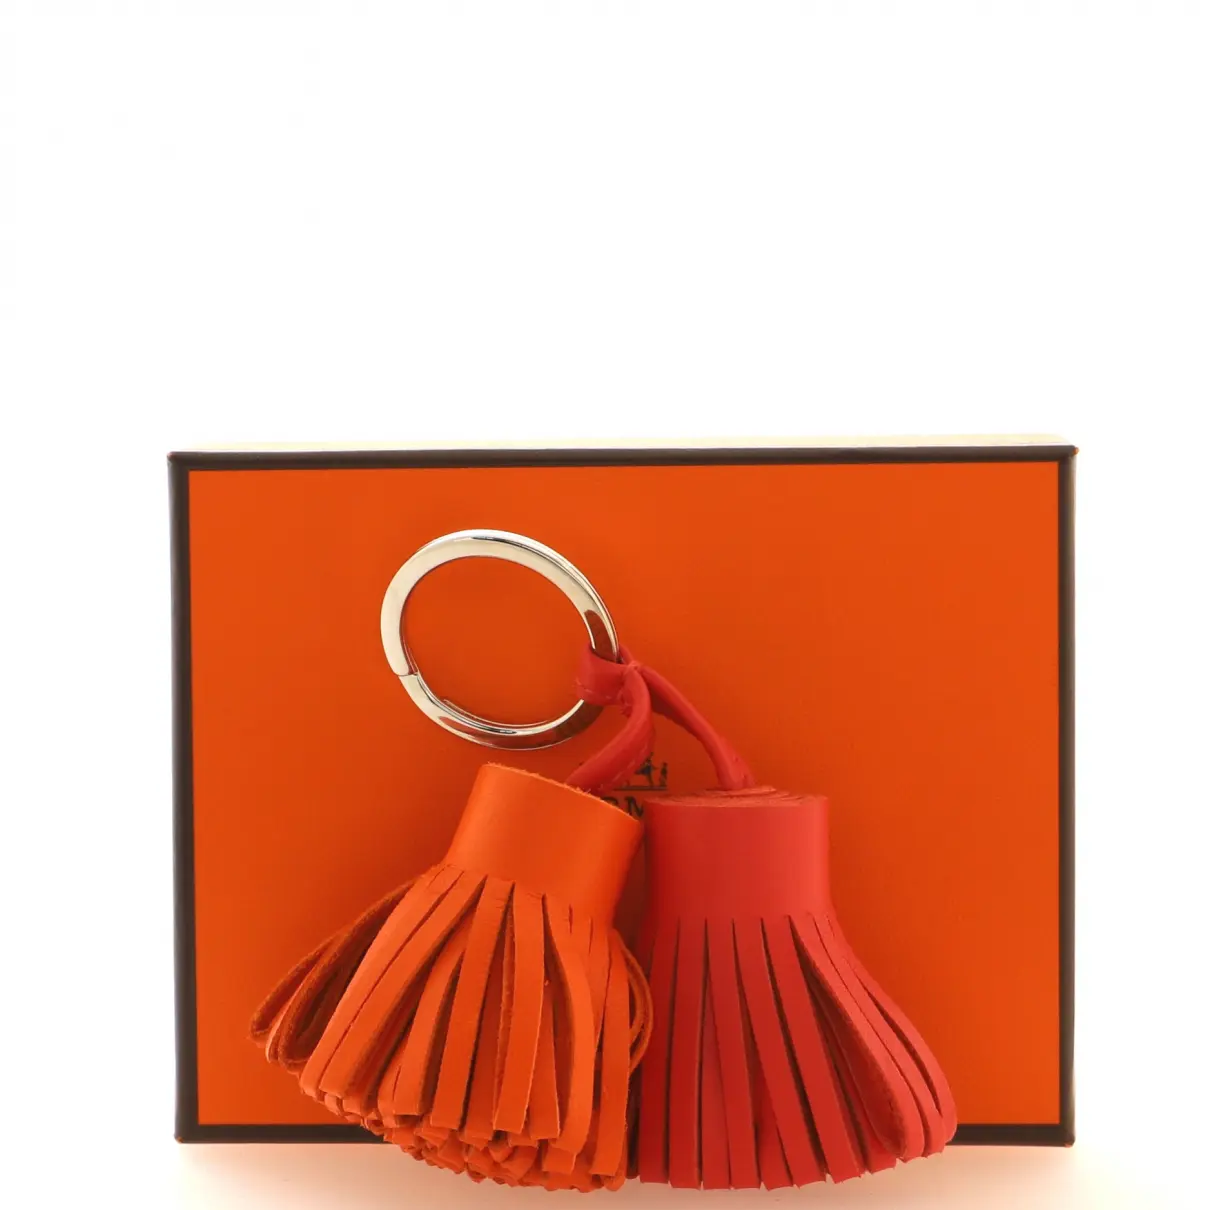 Buy Hermès Leather bag charm online